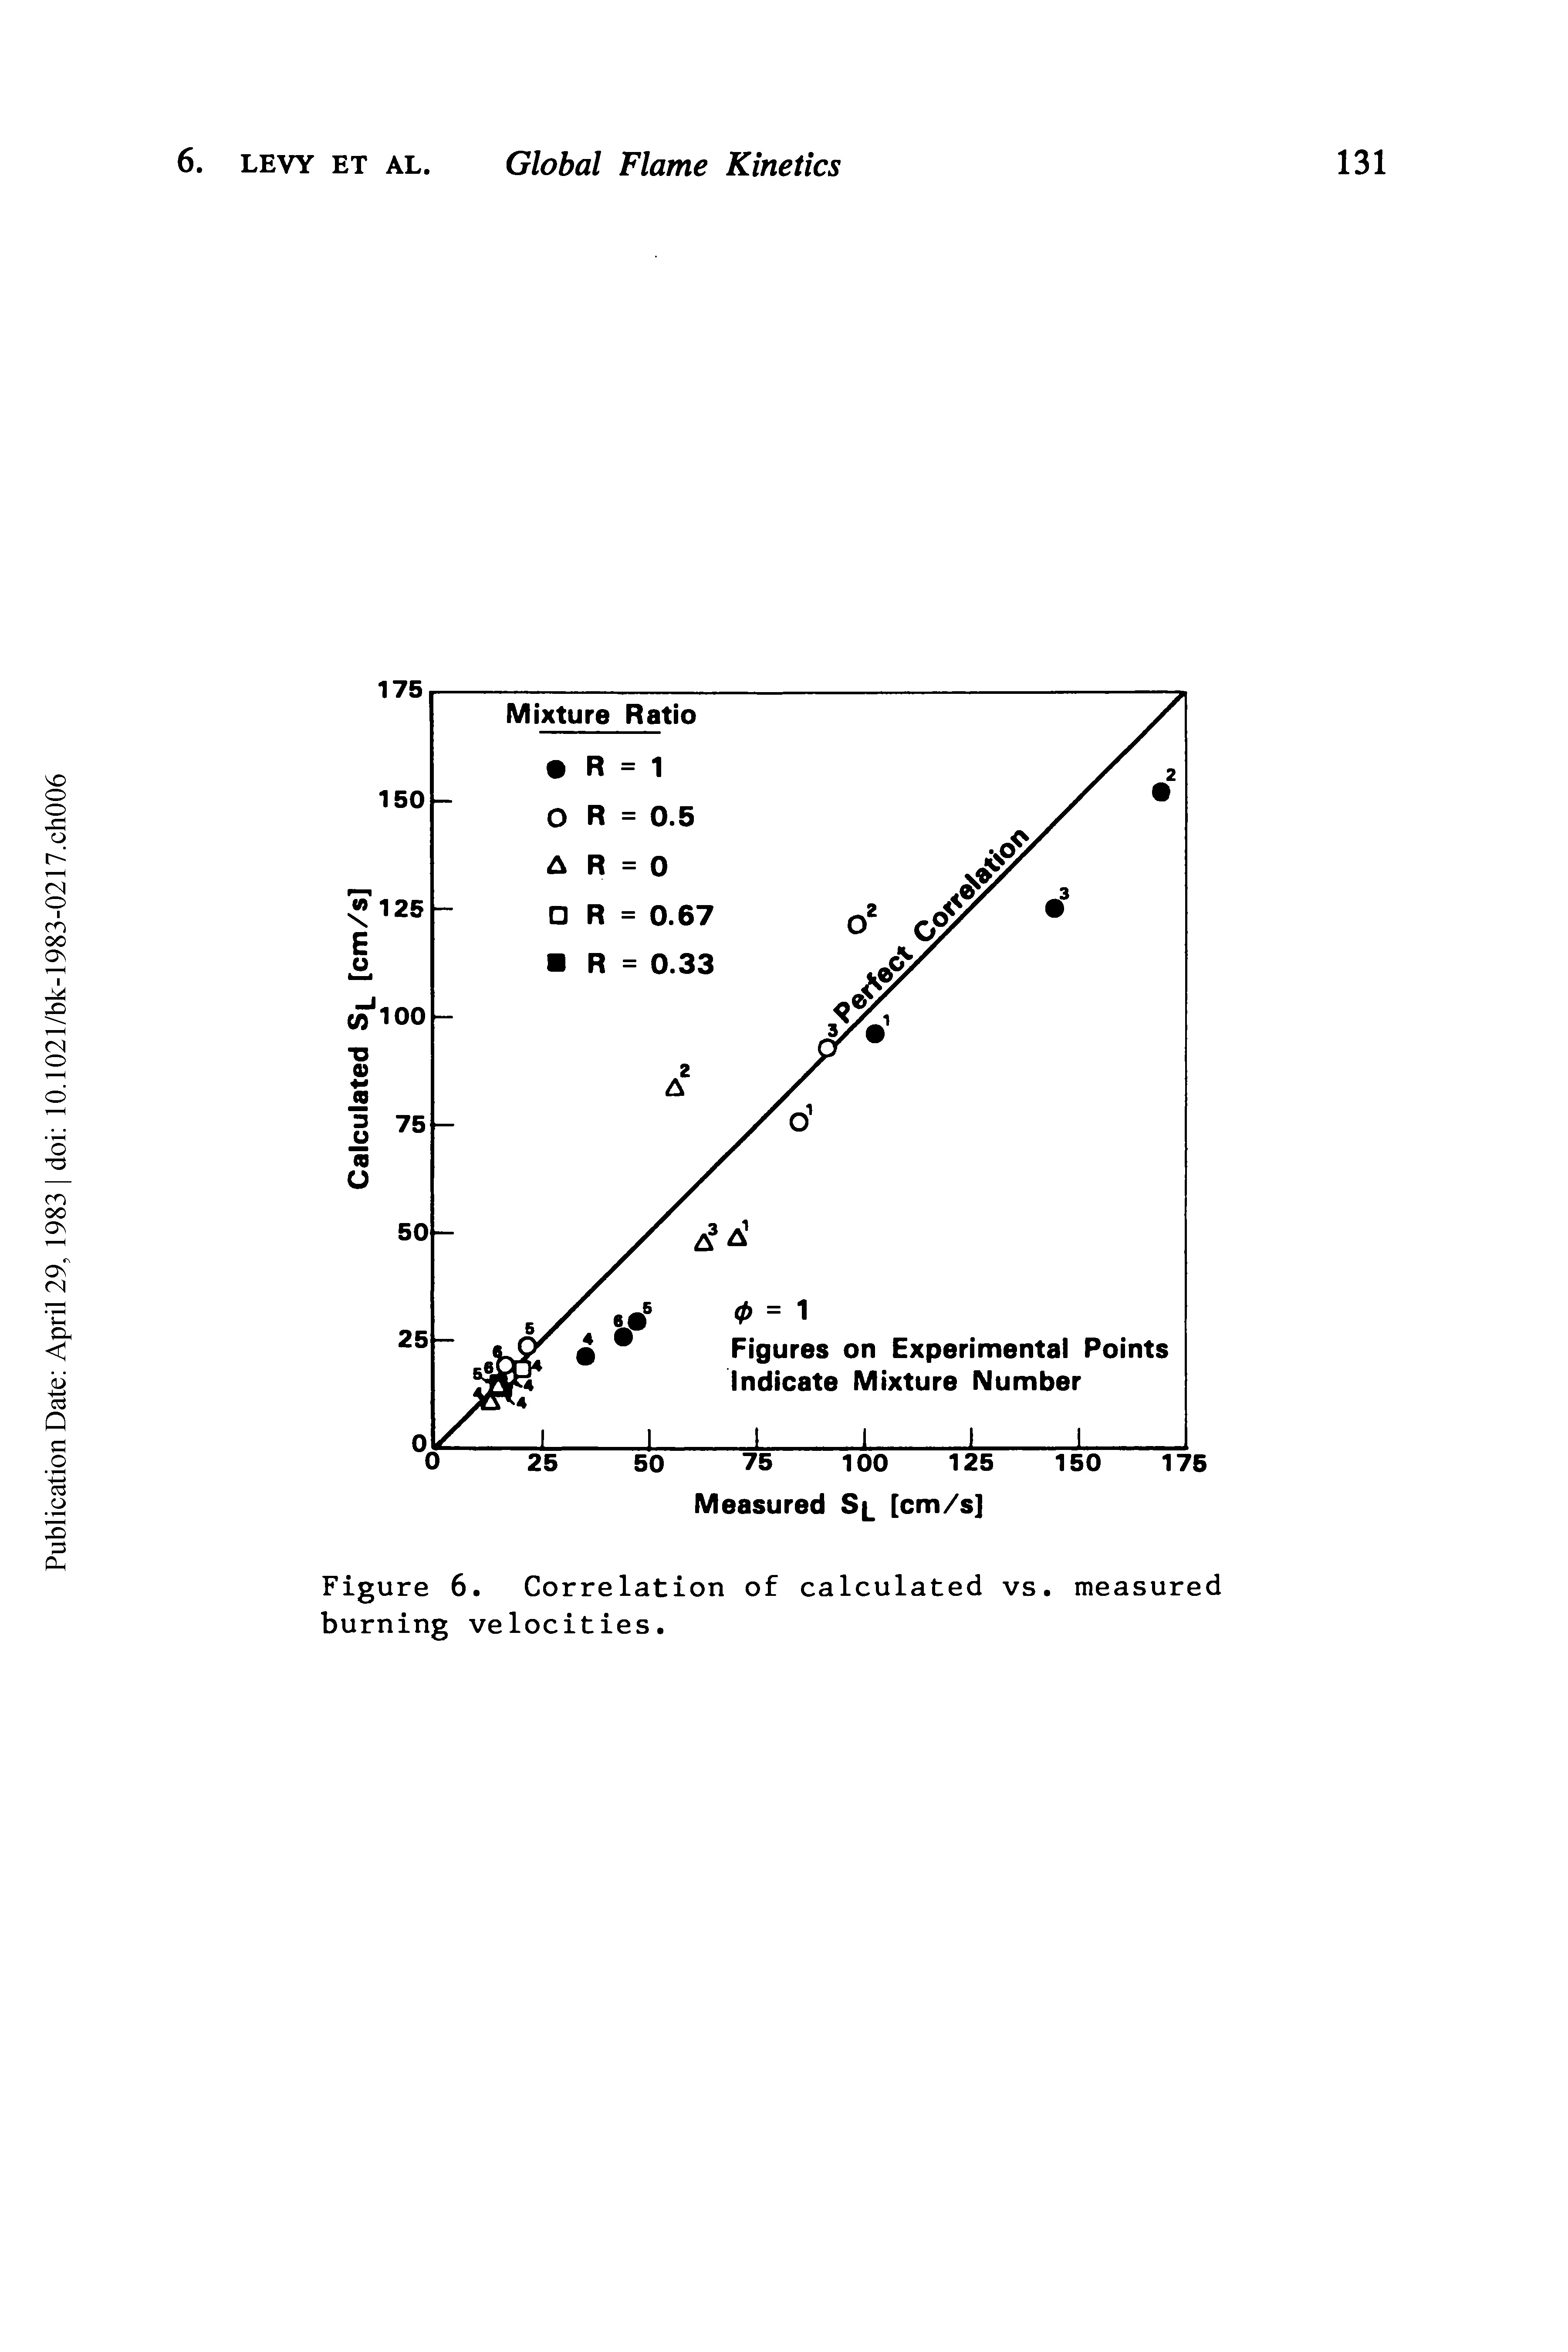 Figure 6. Correlation of calculated vs. measured burning velocities.